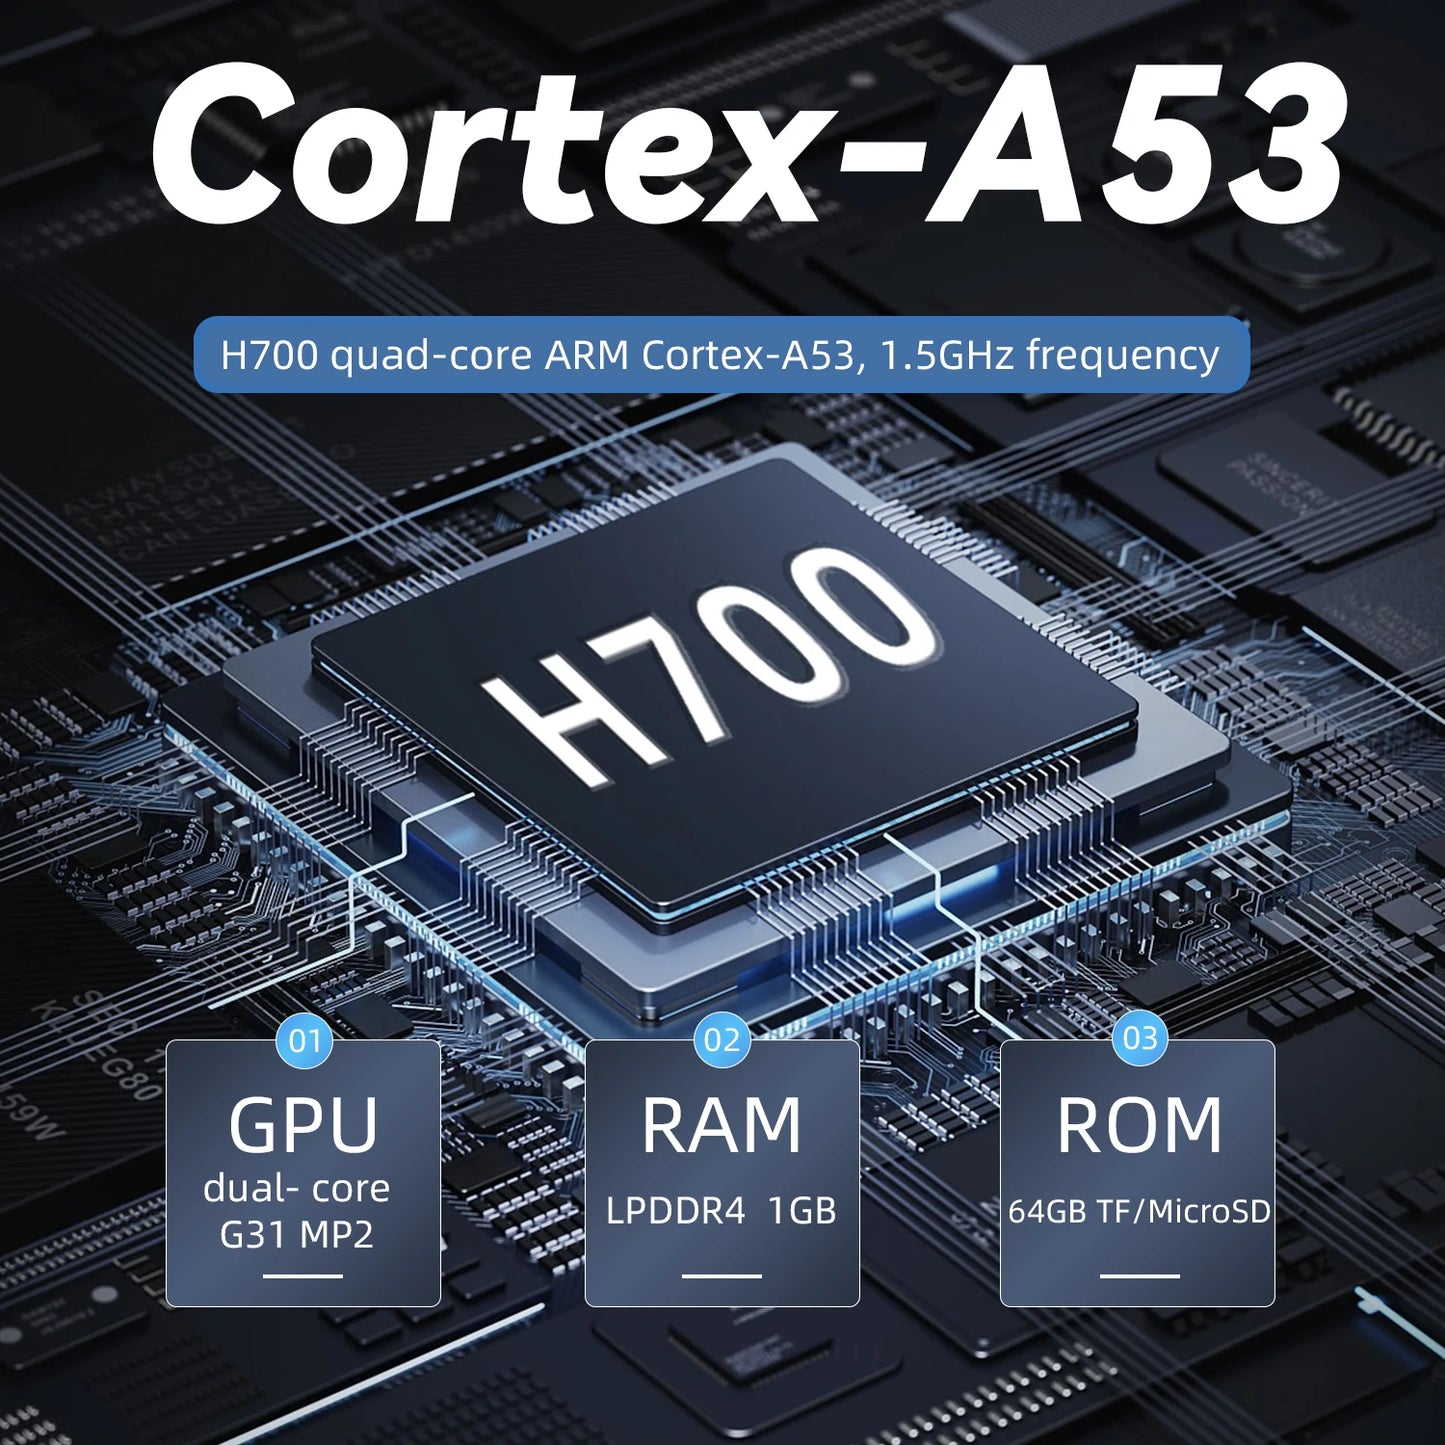 ANBERNIC RG35XX H | Horizontal - 3.5" IPS 640x480 | Retro Handheld Game Console